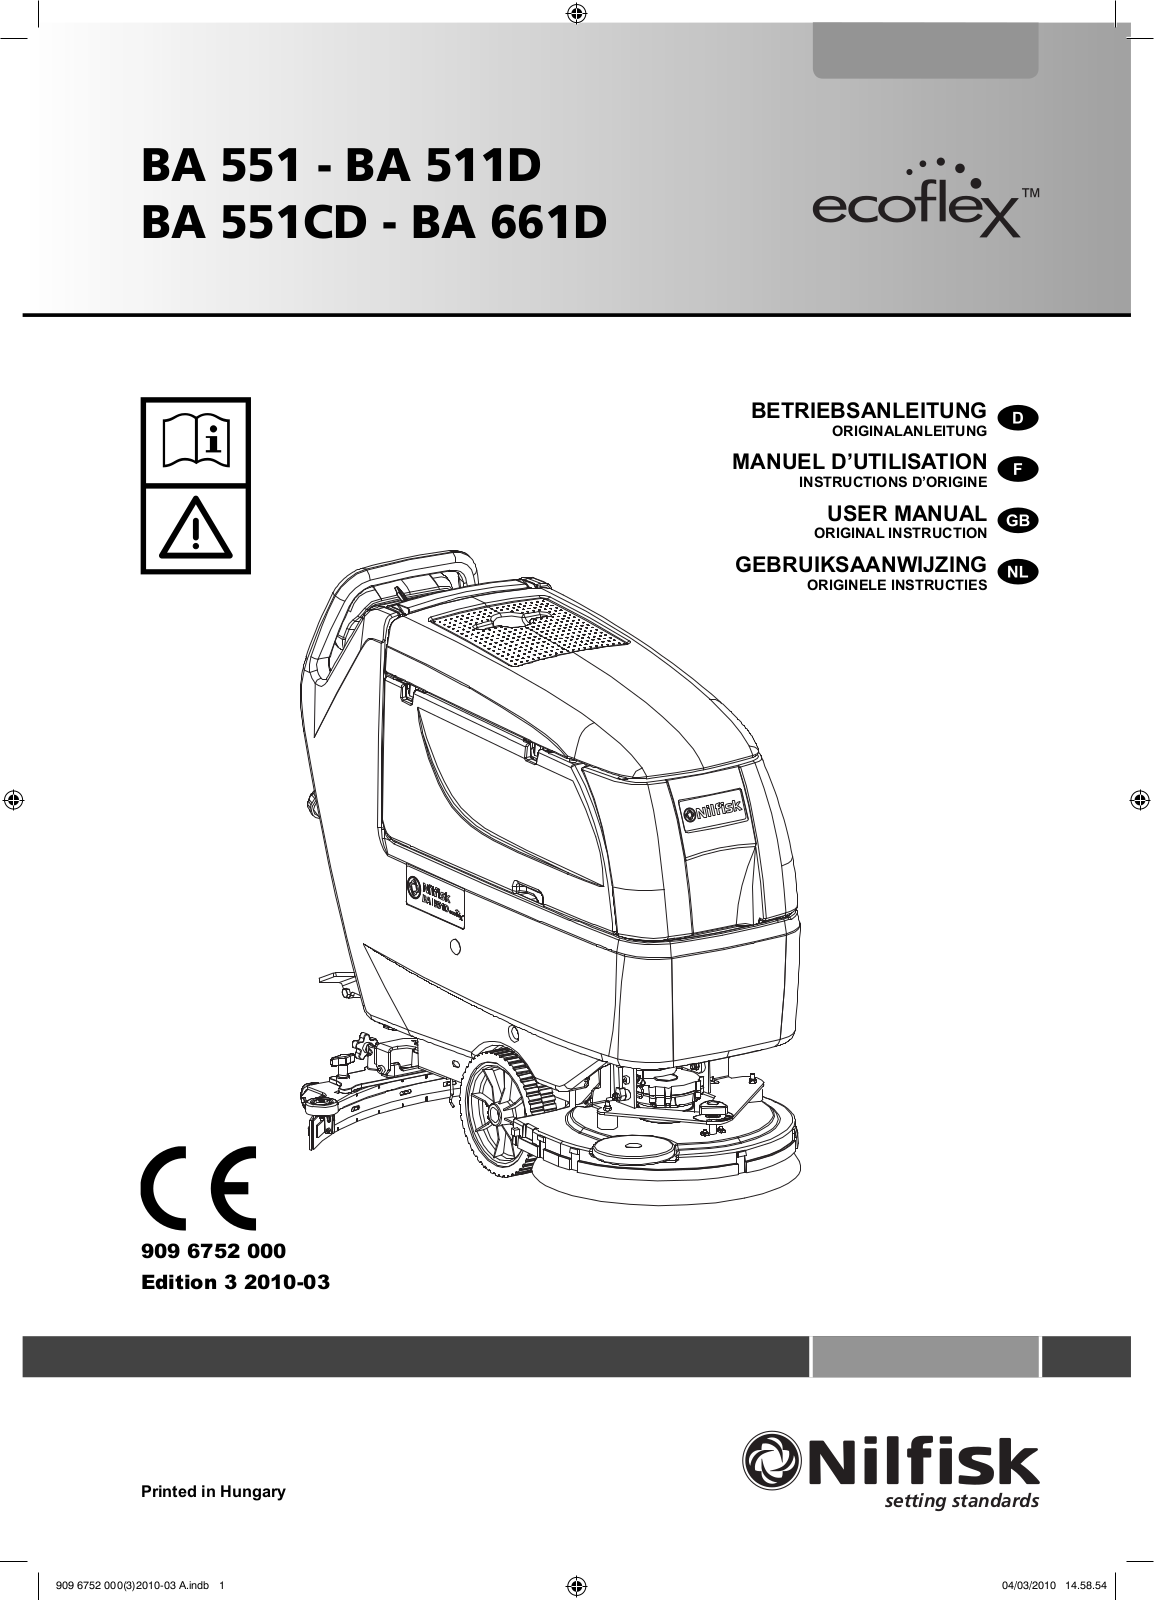 NILFISK BA 511D, BA 661D User Manual